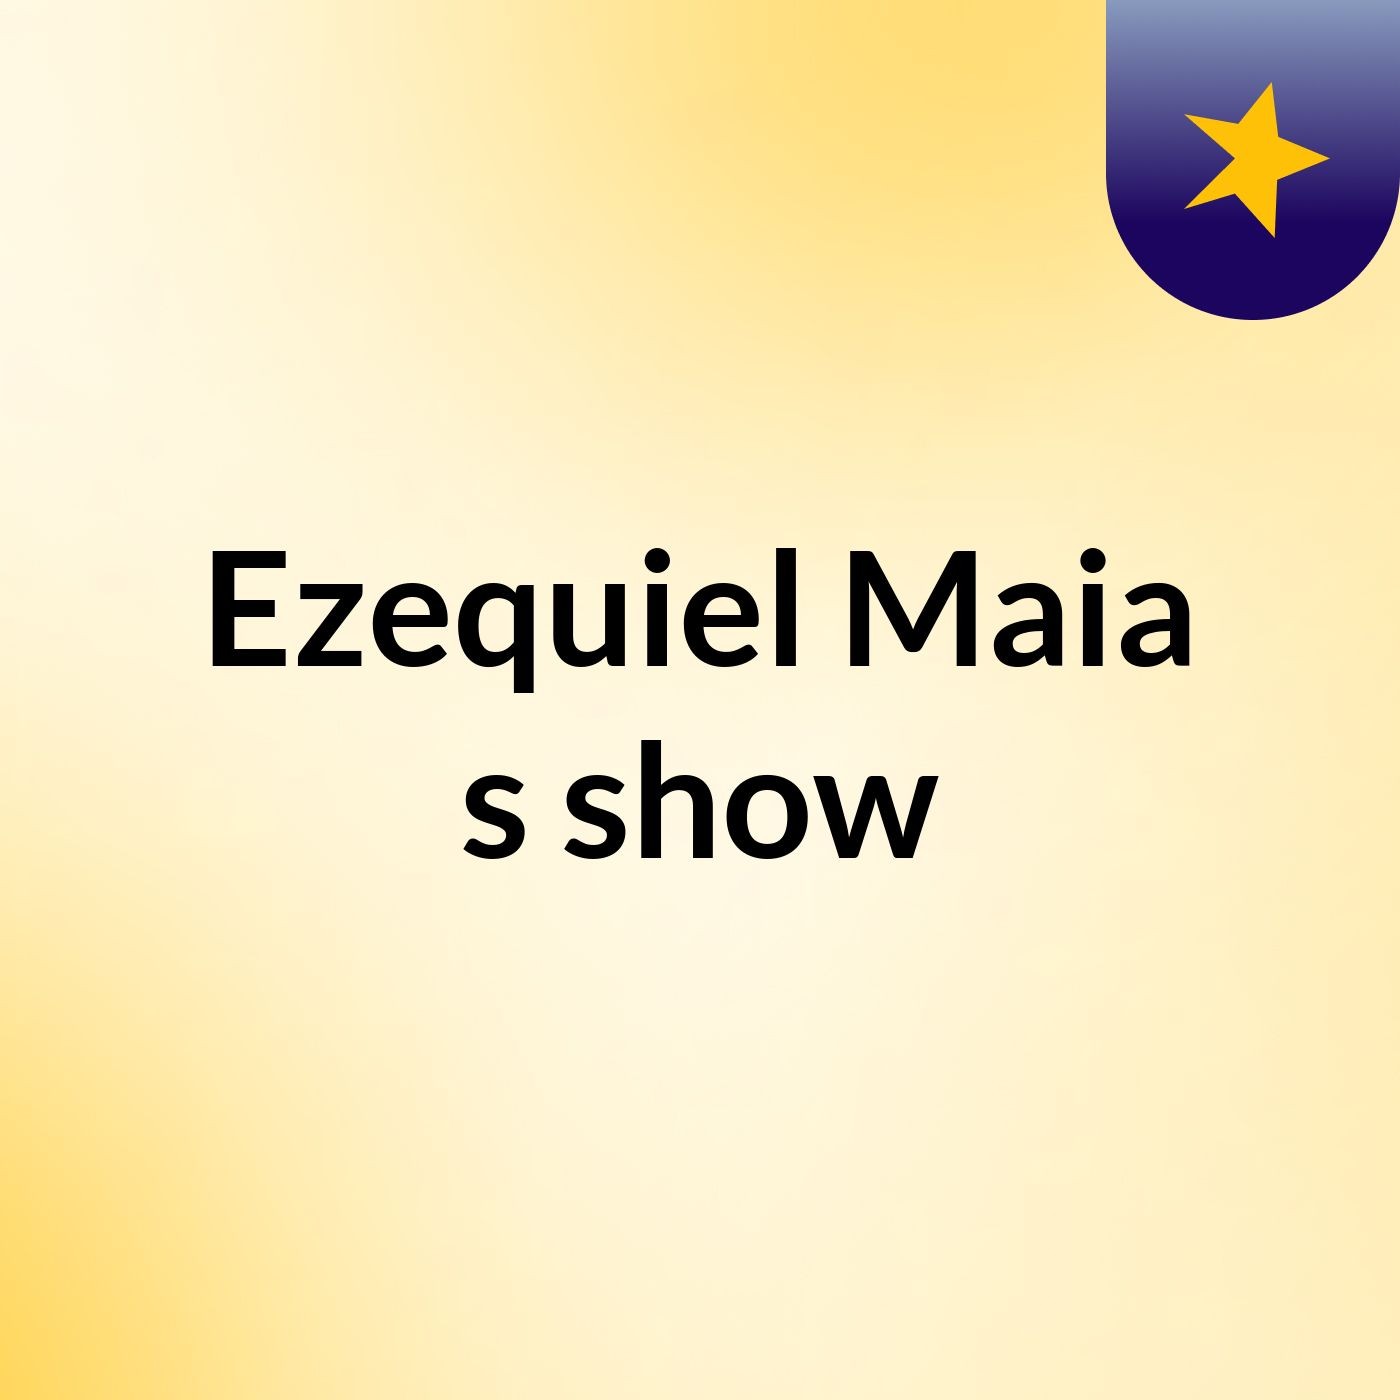 Ezequiel Maia's show